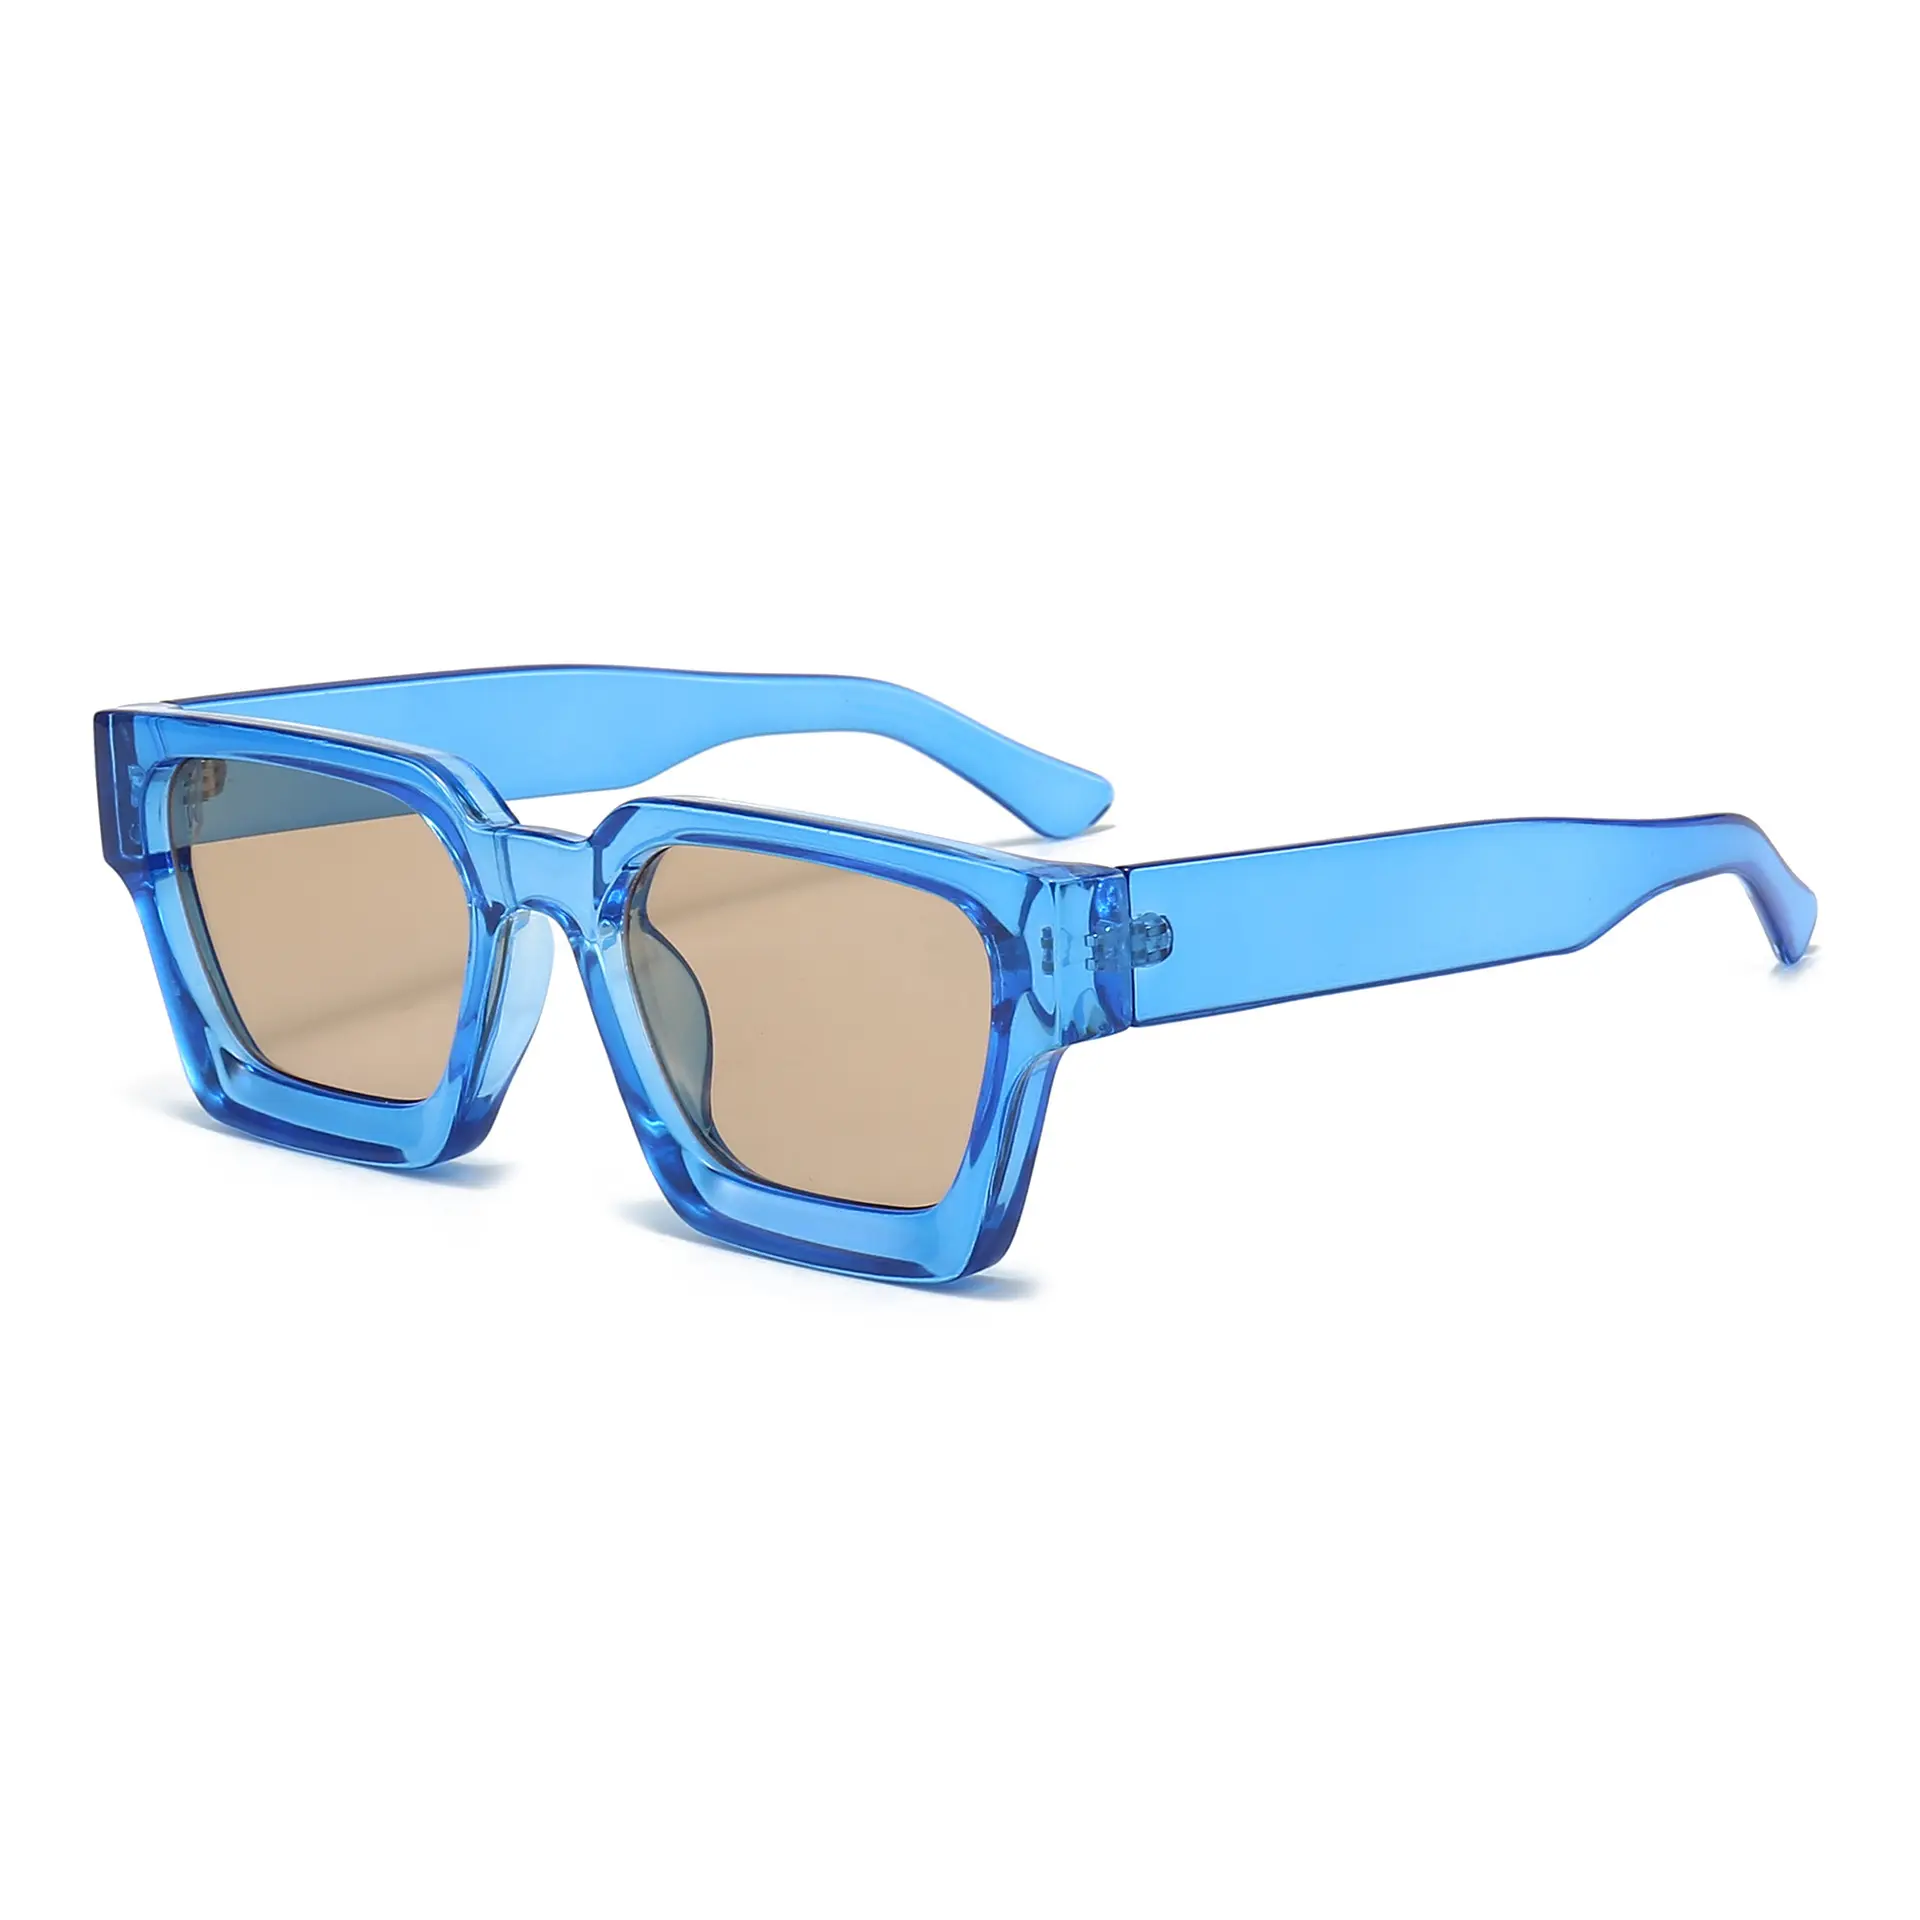 Penjualan langsung dari pabrik kacamata hitam pria wanita perlindungan matahari uv400 permen trendi mode persegi baru